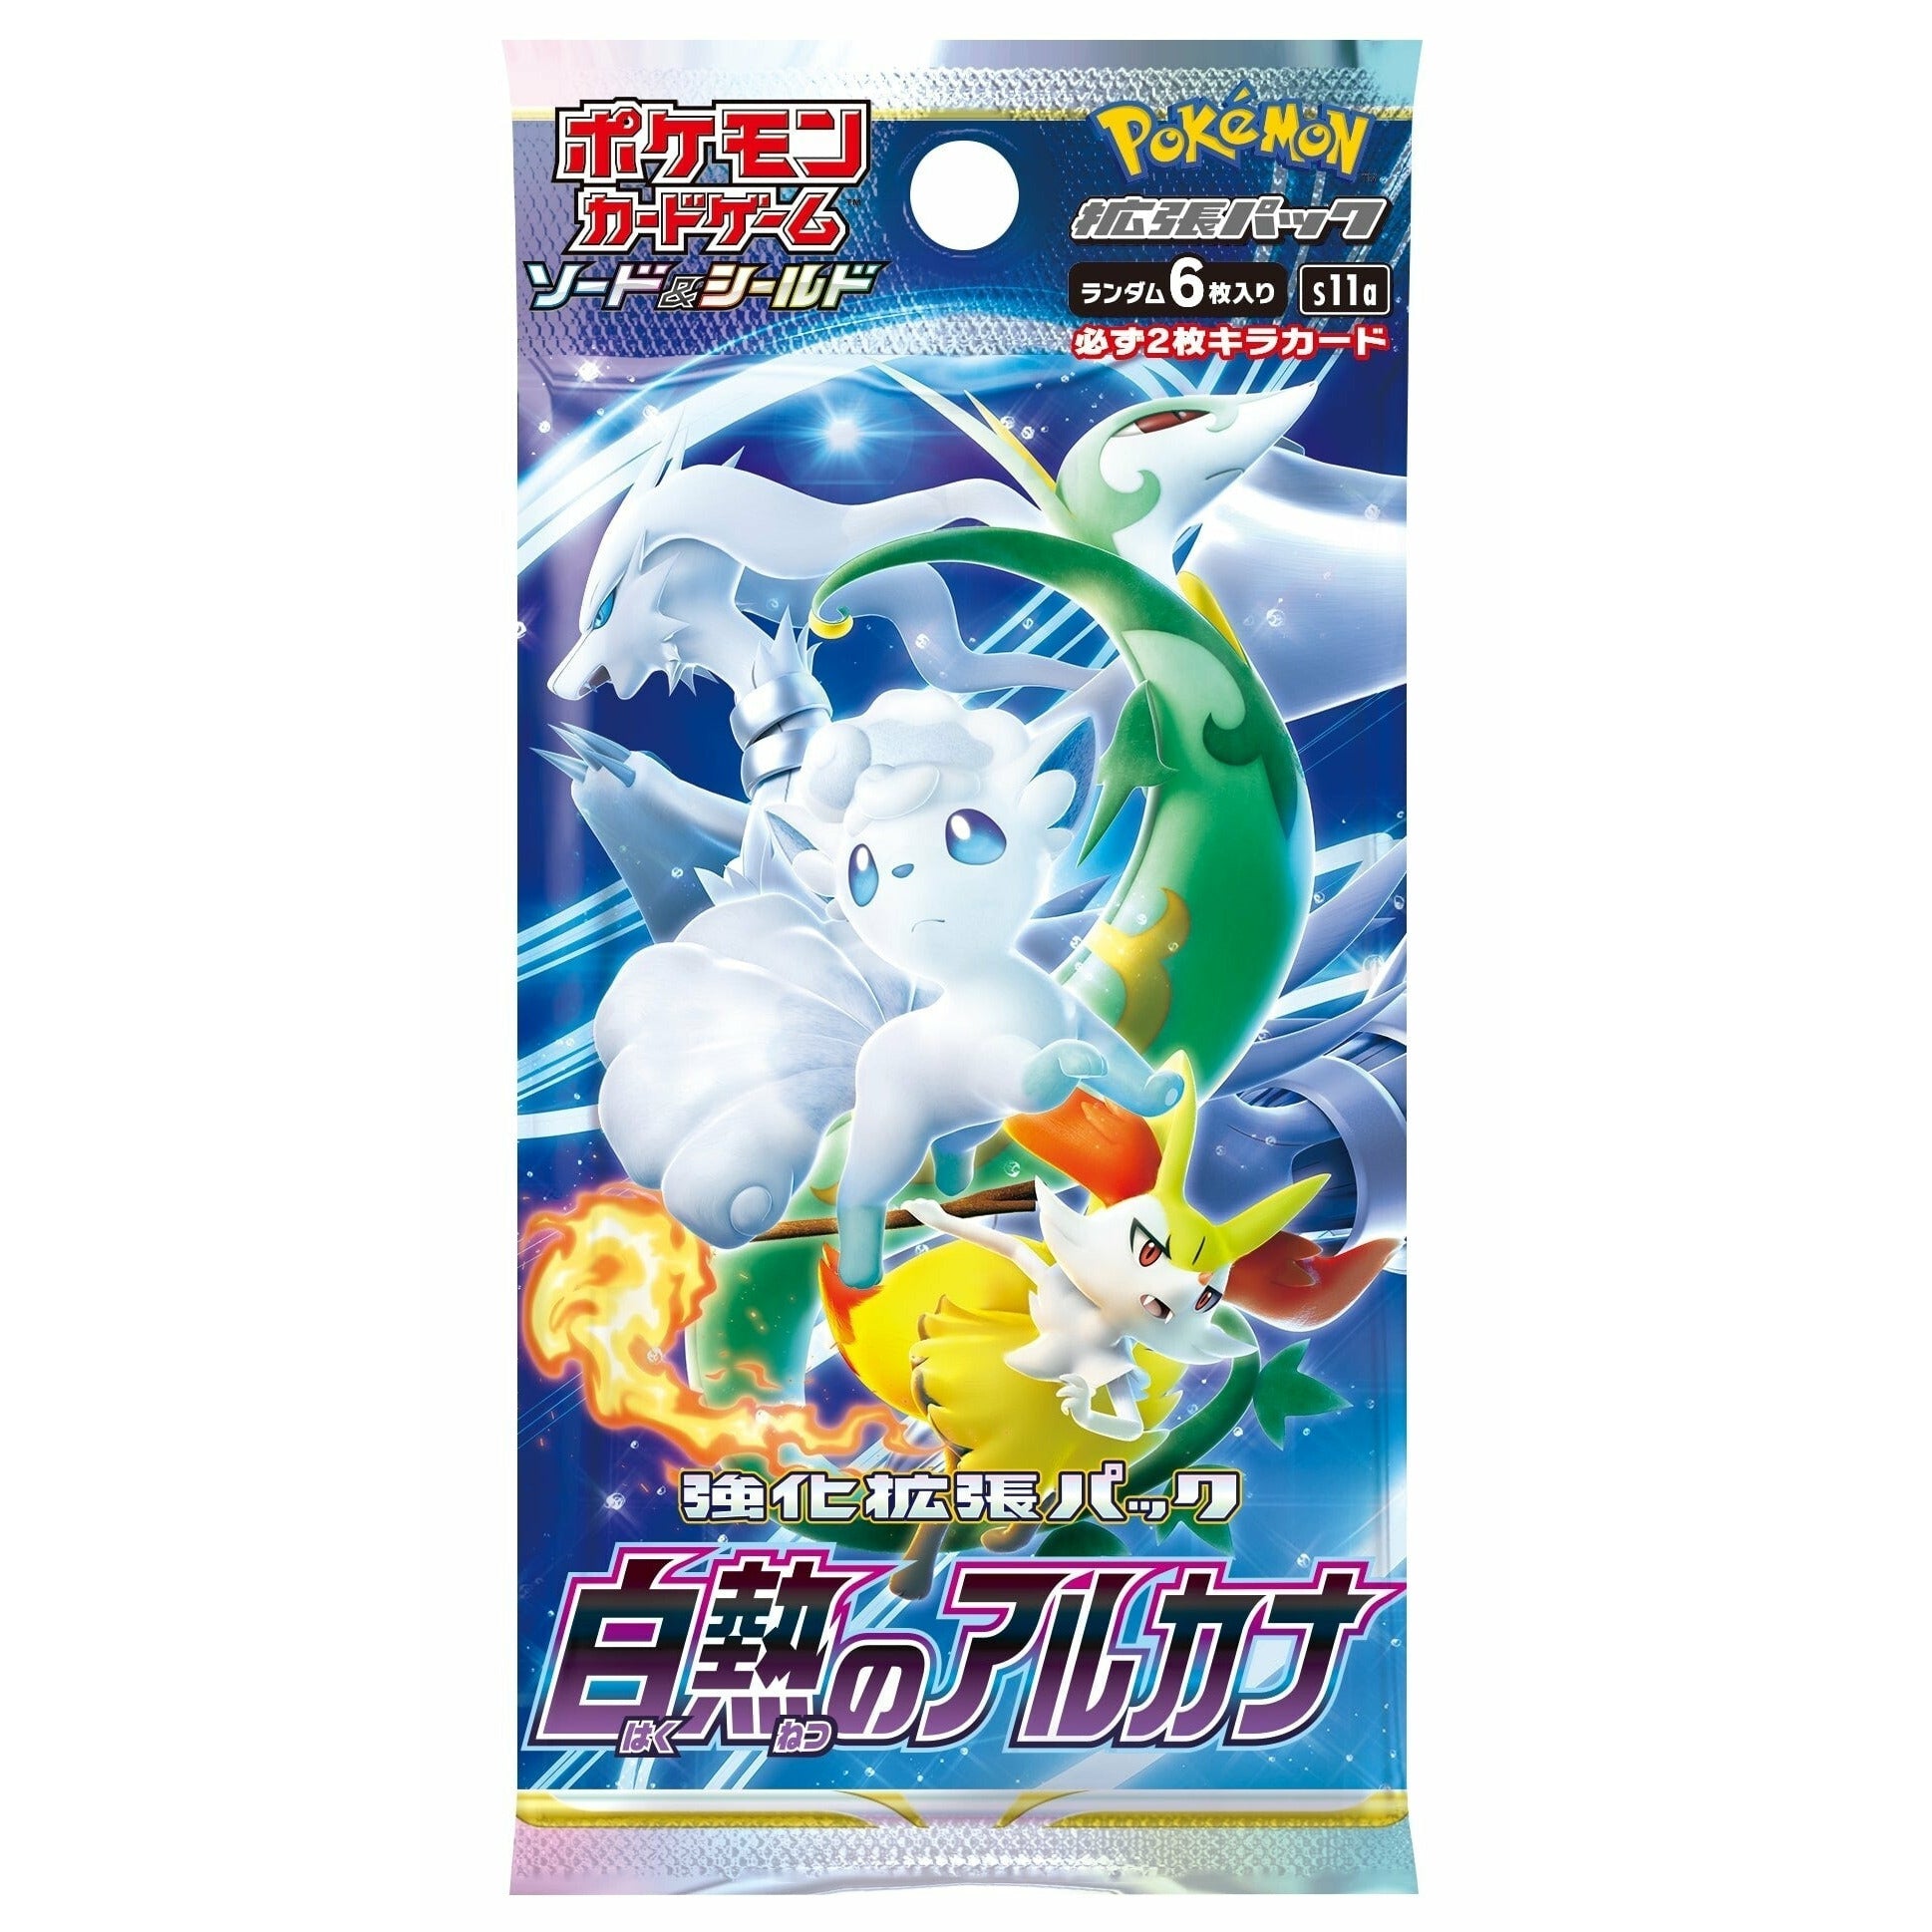 Pokémon TCG: Sword & Shield S11a – Incandescent Arcana Booster Pack (Japanese)